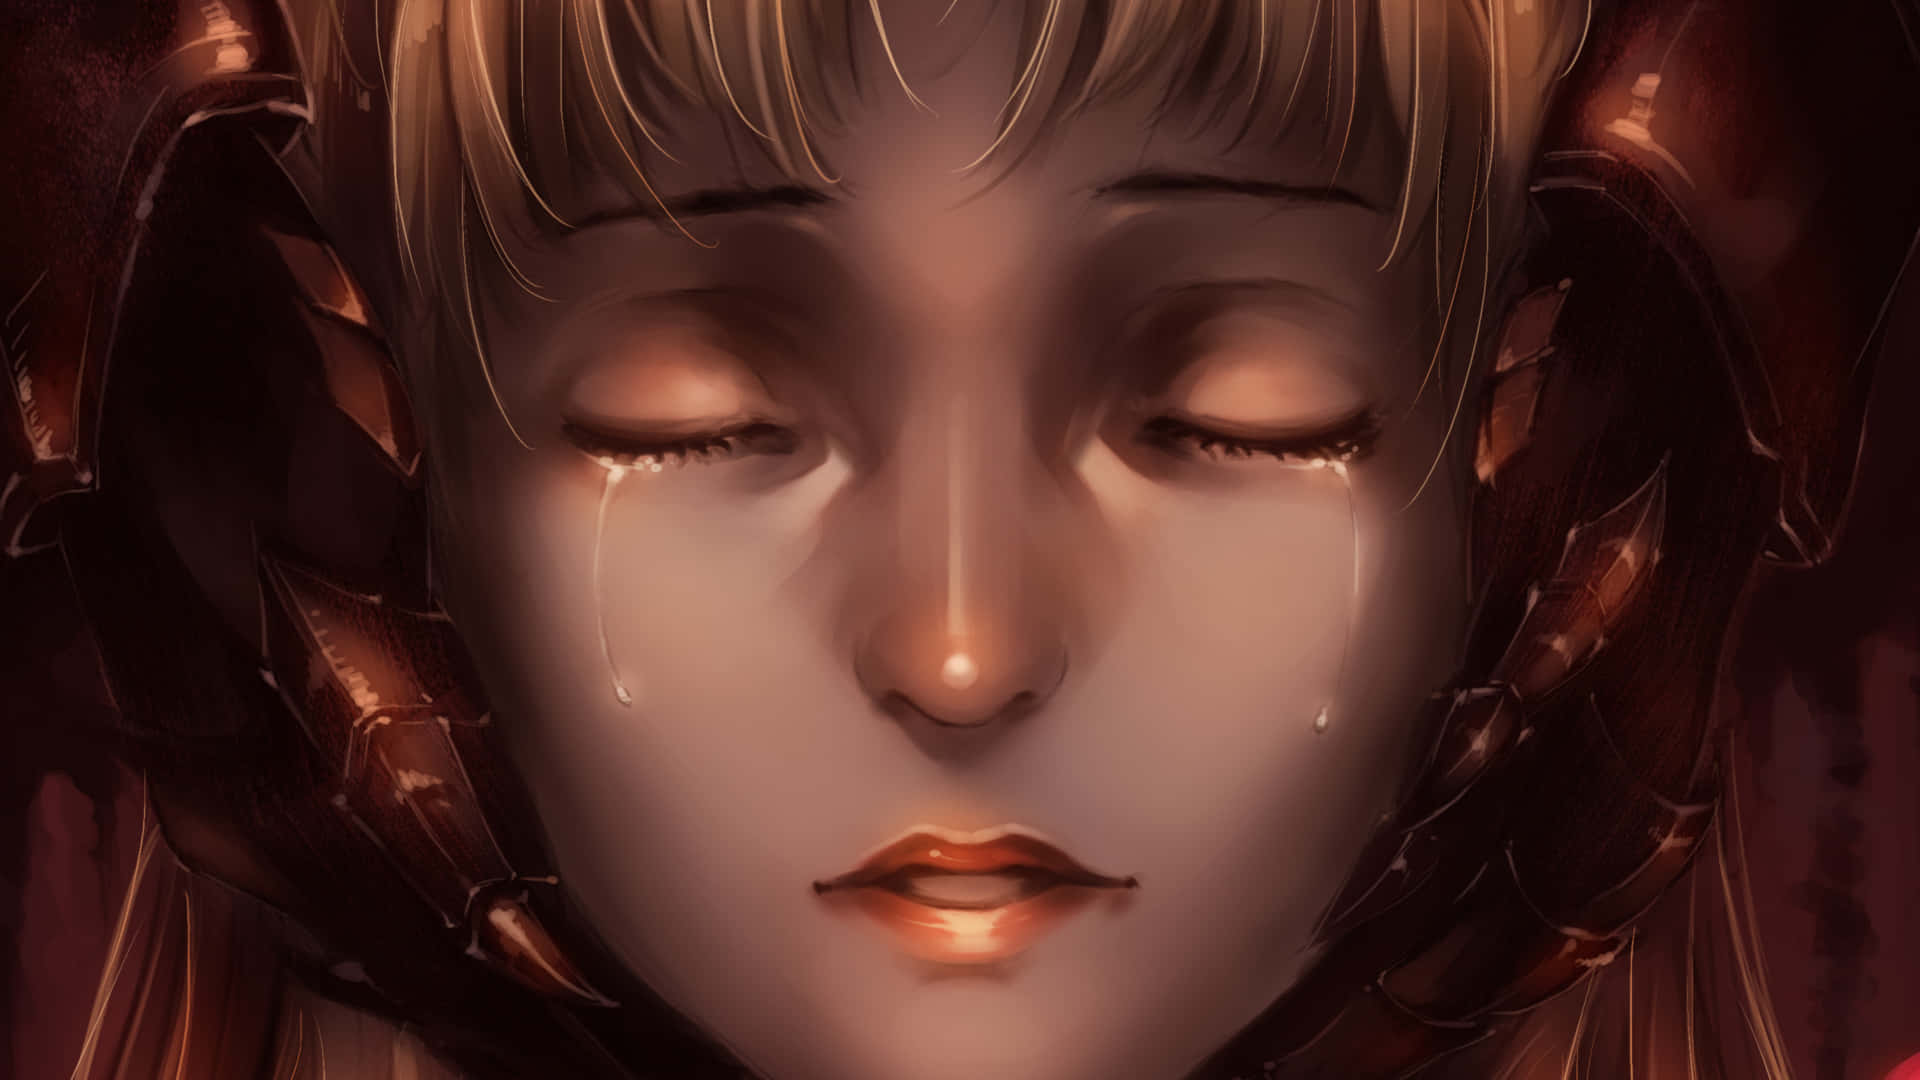 Girl Crying Closed Eyes Digital Art Background